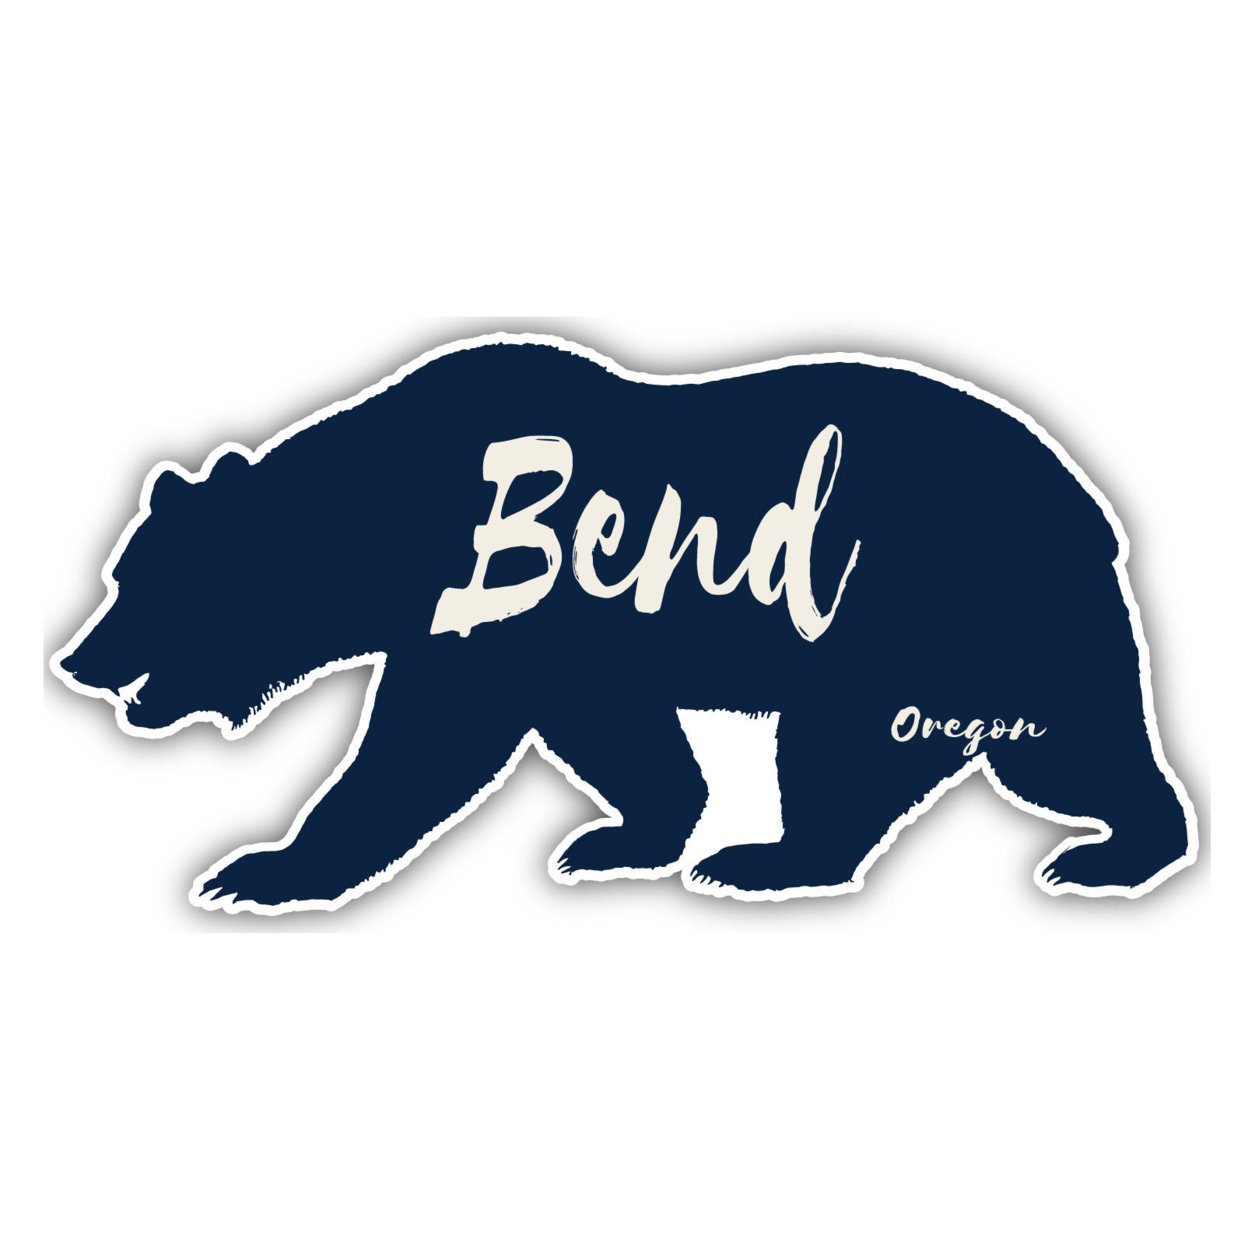 Bend Oregon Souvenir Decorative Stickers (Choose Theme And Size) - Single Unit, 6-Inch, Adventures Awaits